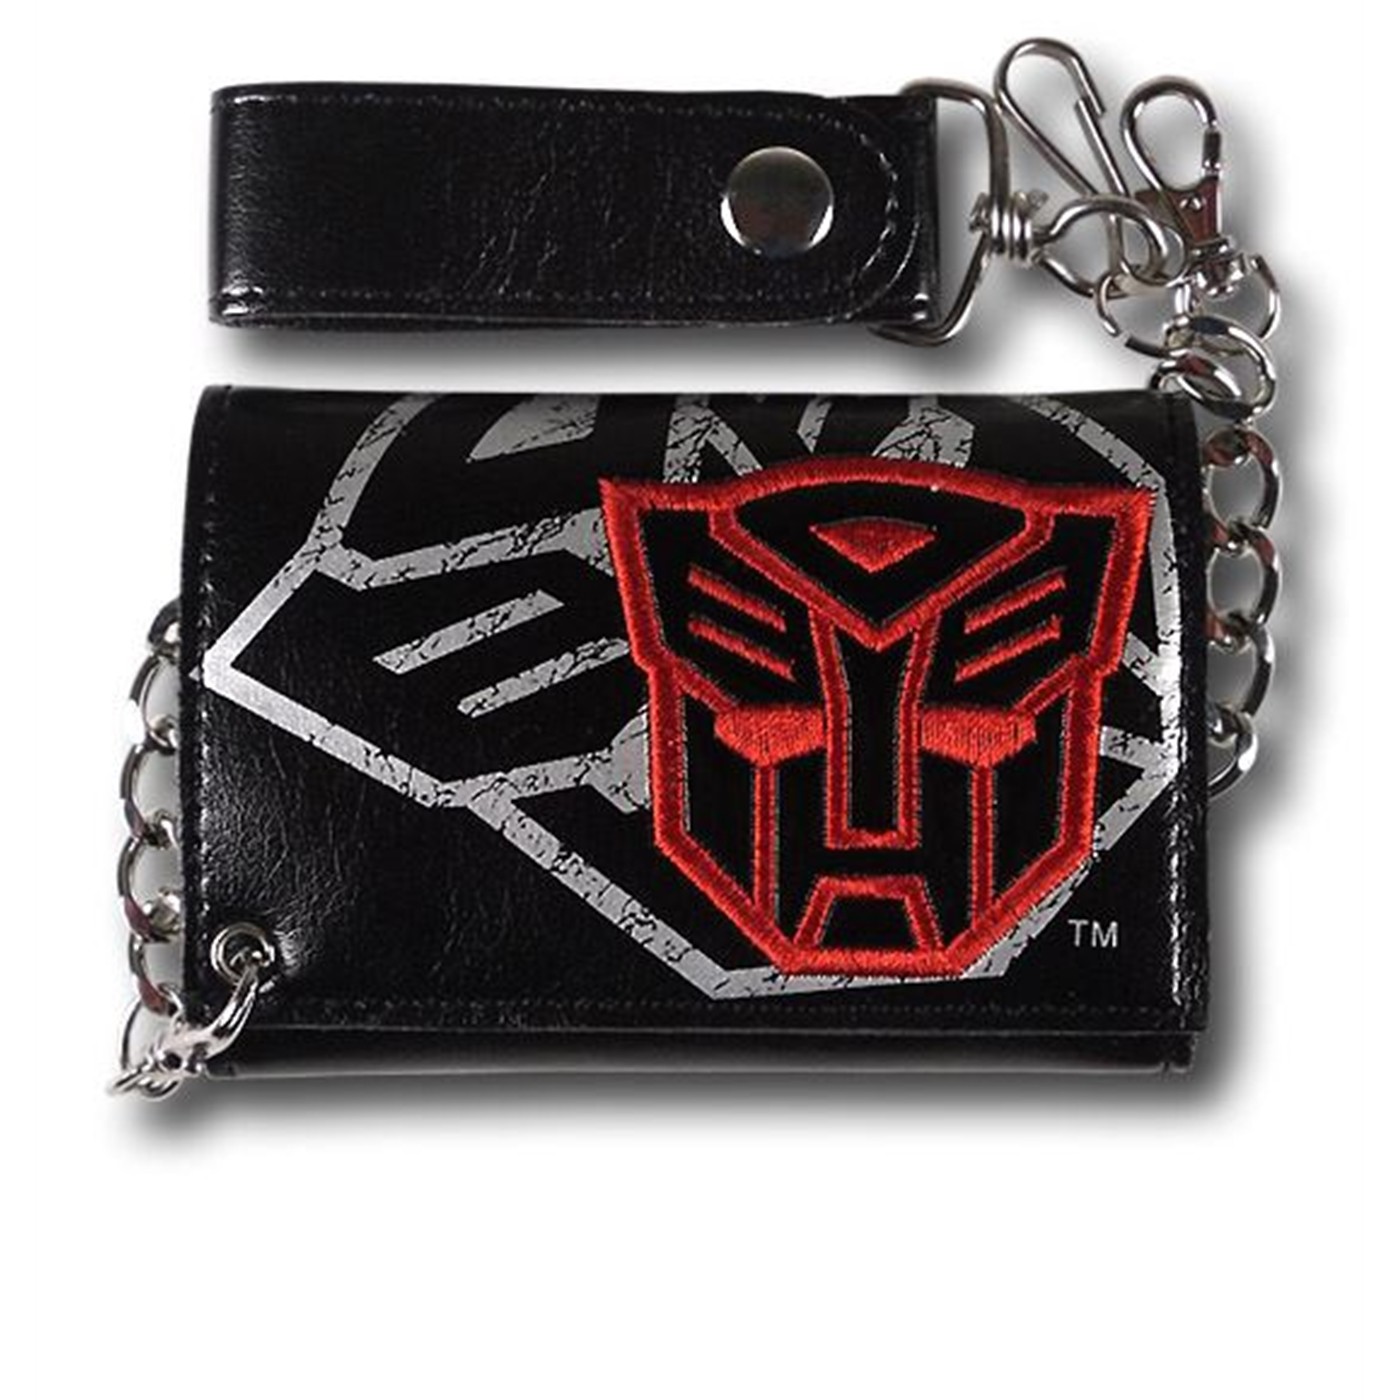 Transformers Autobot Symbol Black Chain Wallet